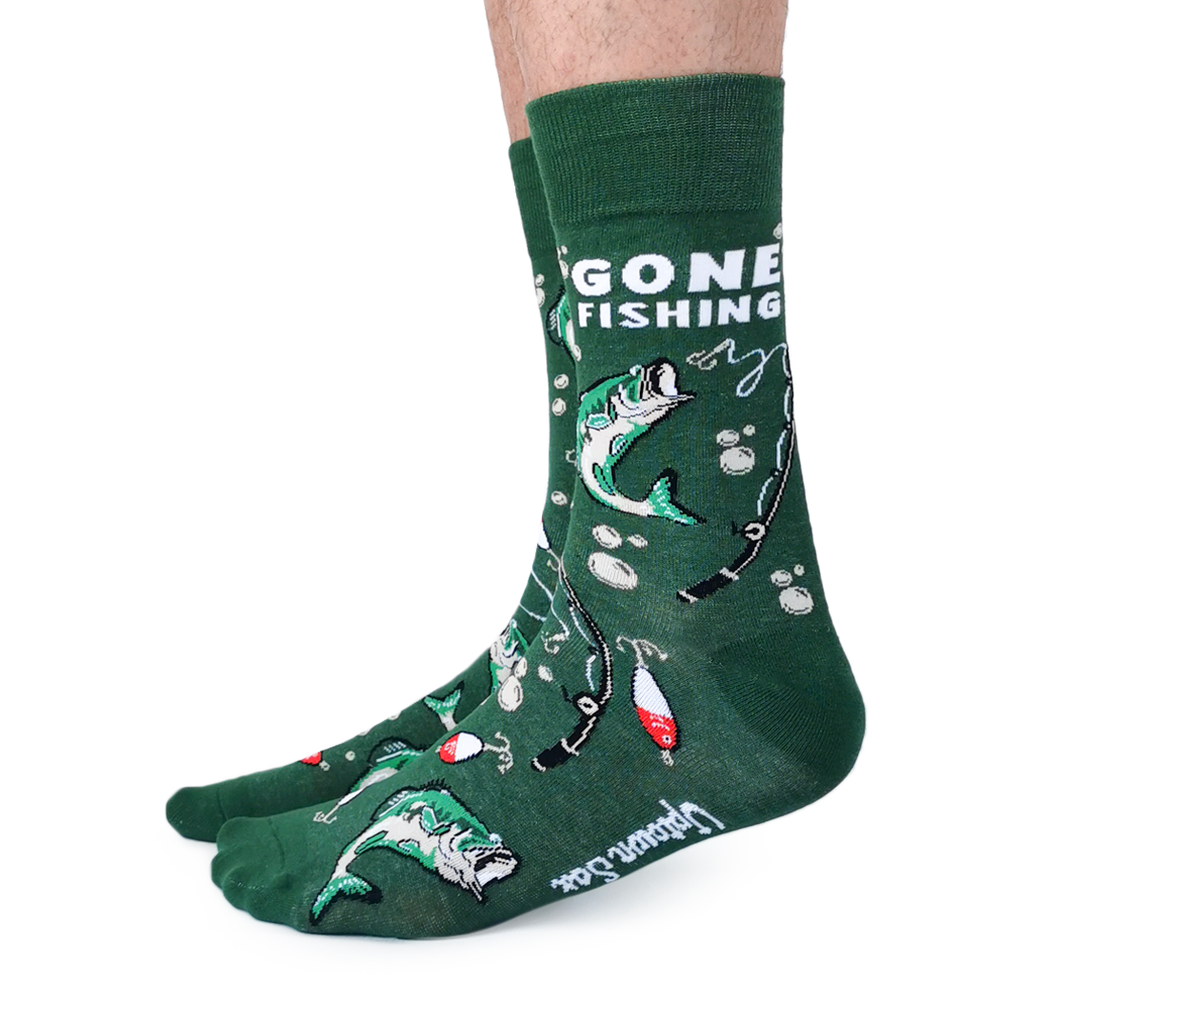 Men's Salmon Gone Fishing Socks by Soxfords